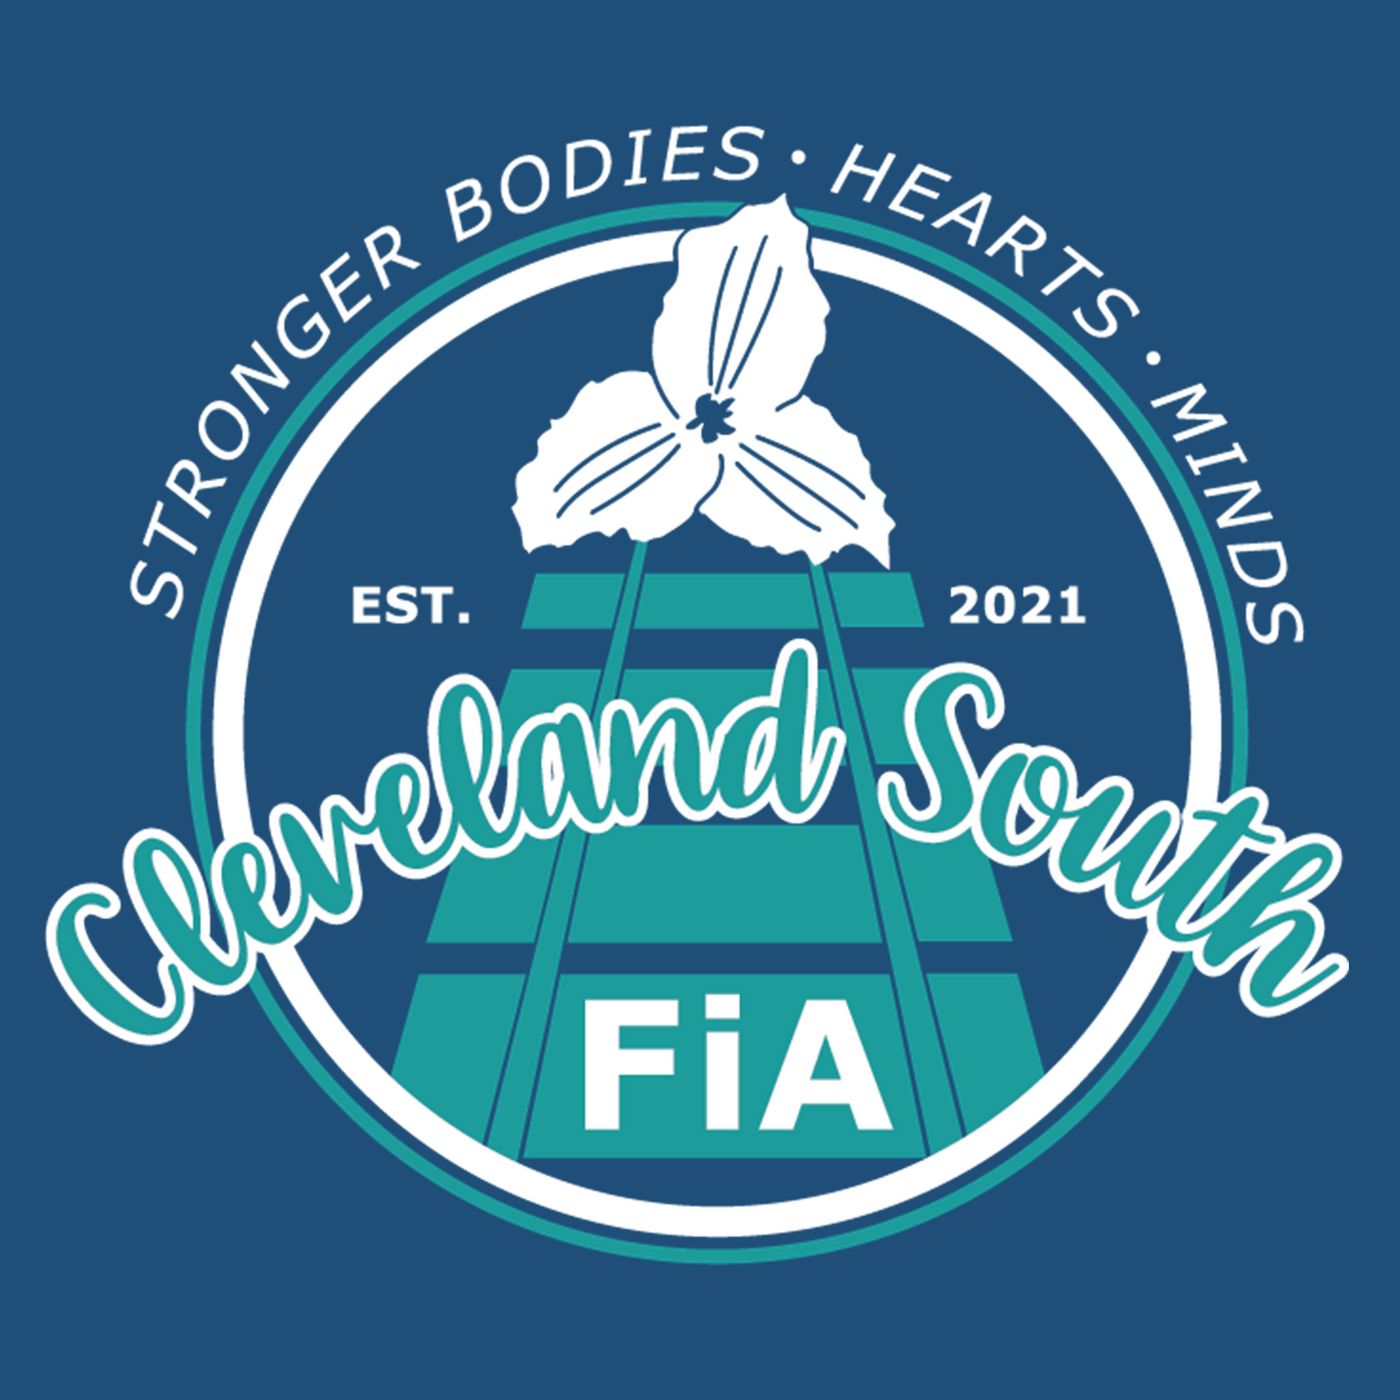 FiA Cleveland South Pre-Order October 2022